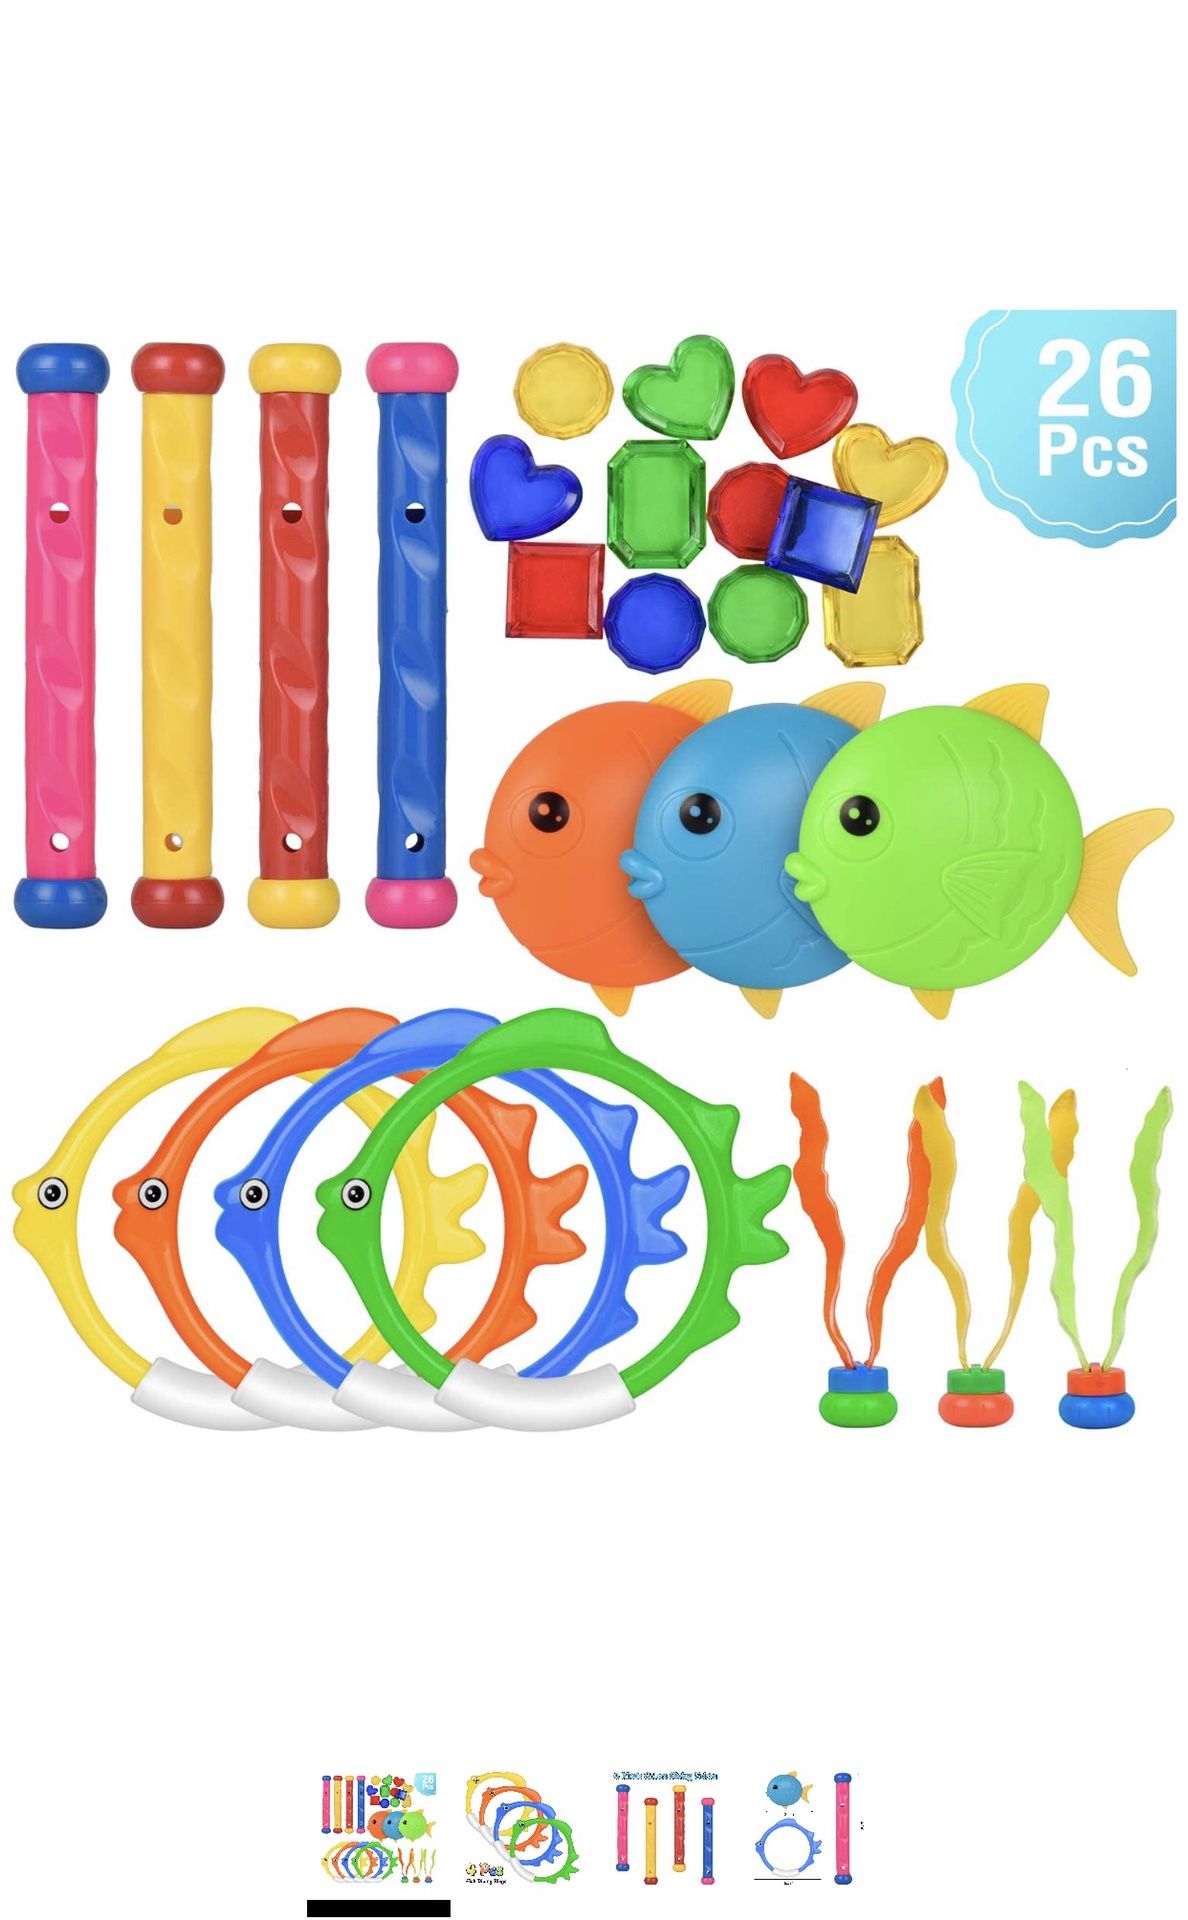 Pool Toys for Kids, Toddler Pool Games with Toy Fish Rings (4 Pcs), Diving Sticks (4 Pcs), Toy Fish (3 Pcs), Pool Toy Plants (3 Pcs) & Pool Gems (12